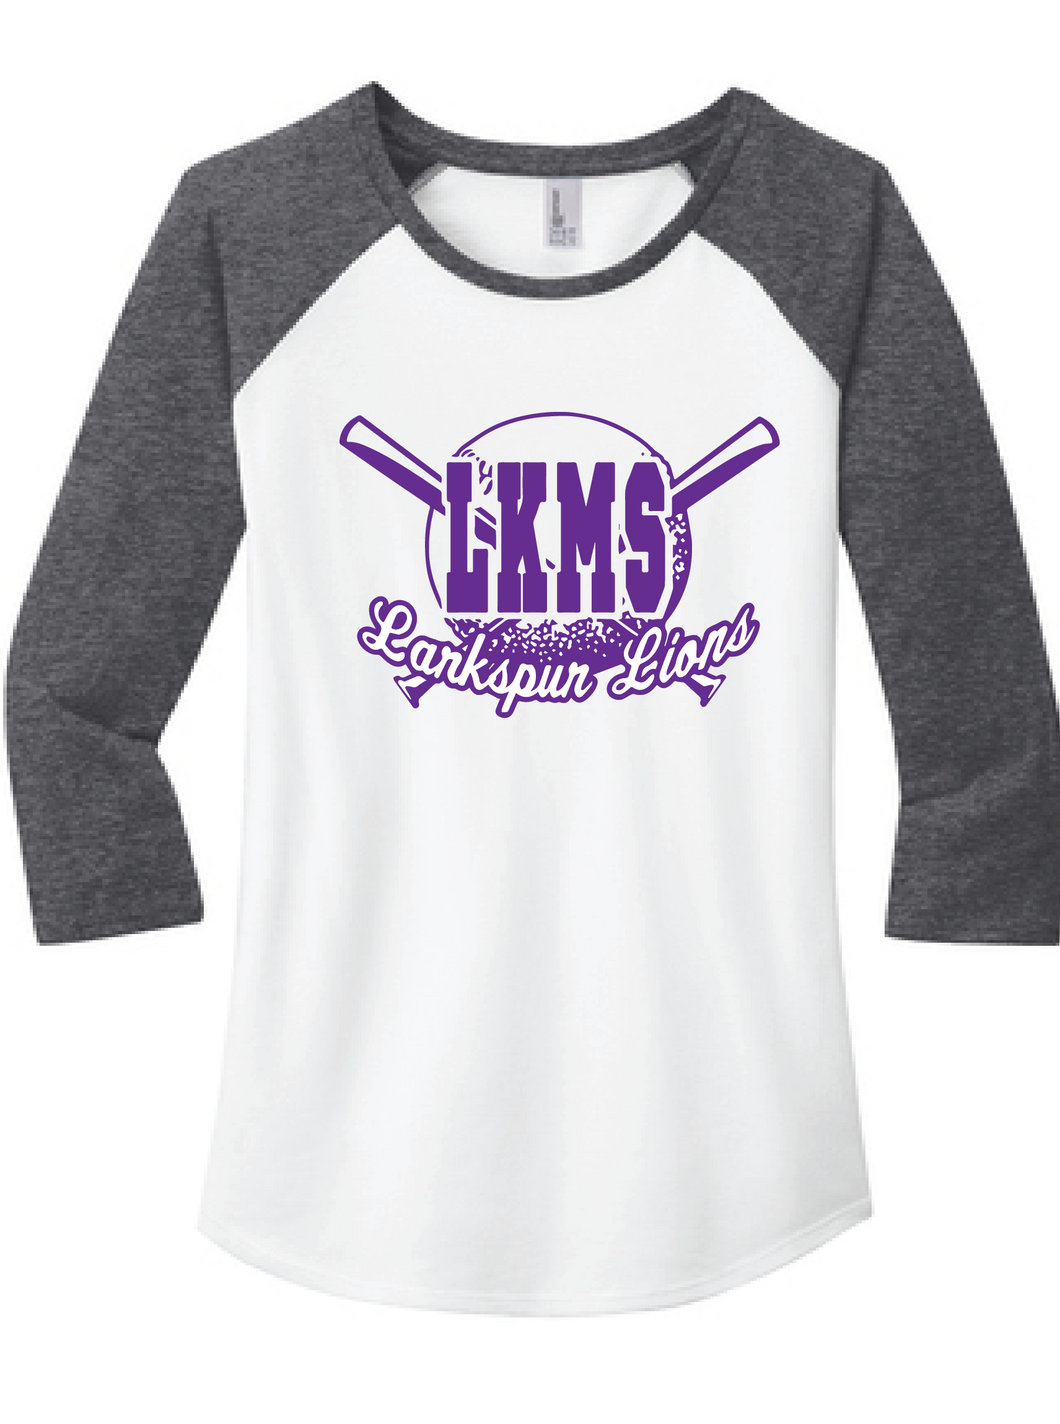 Baseball T-Shirt / White & Grey / Larkspur Softball - Fidgety